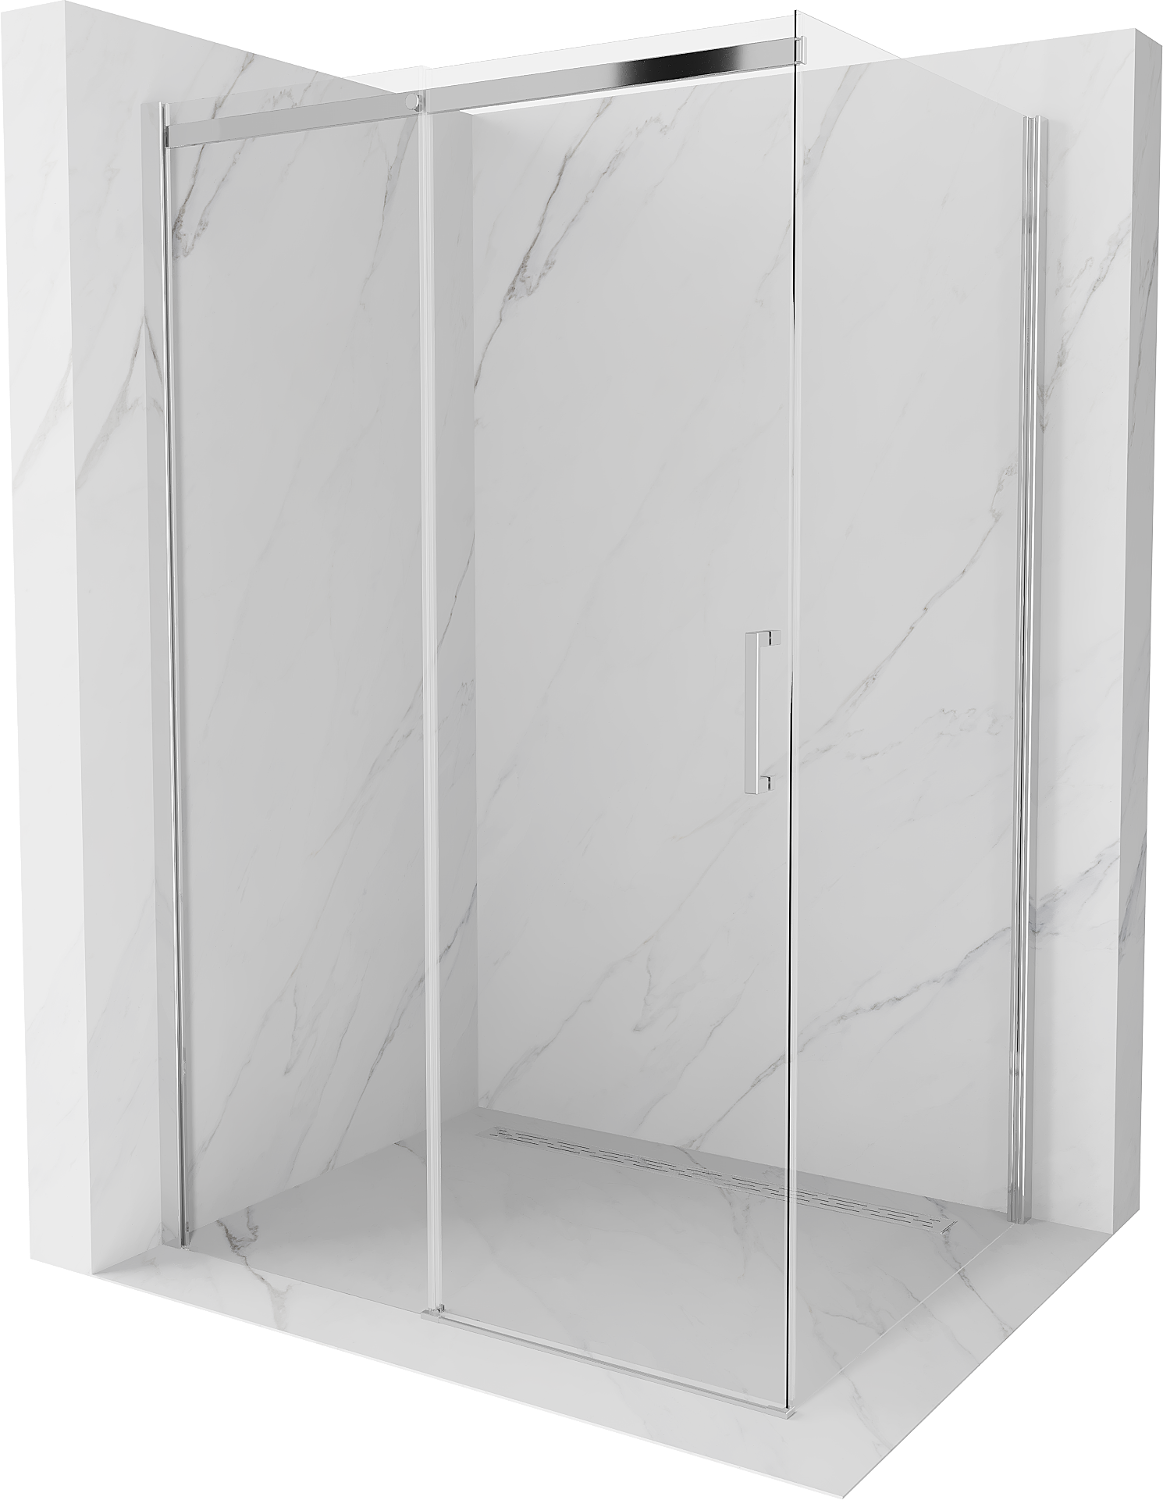 Mexen Omega kabina prysznicowa rozsuwana 130 x 80 cm, transparent, chrom - 825-130-080-01-00